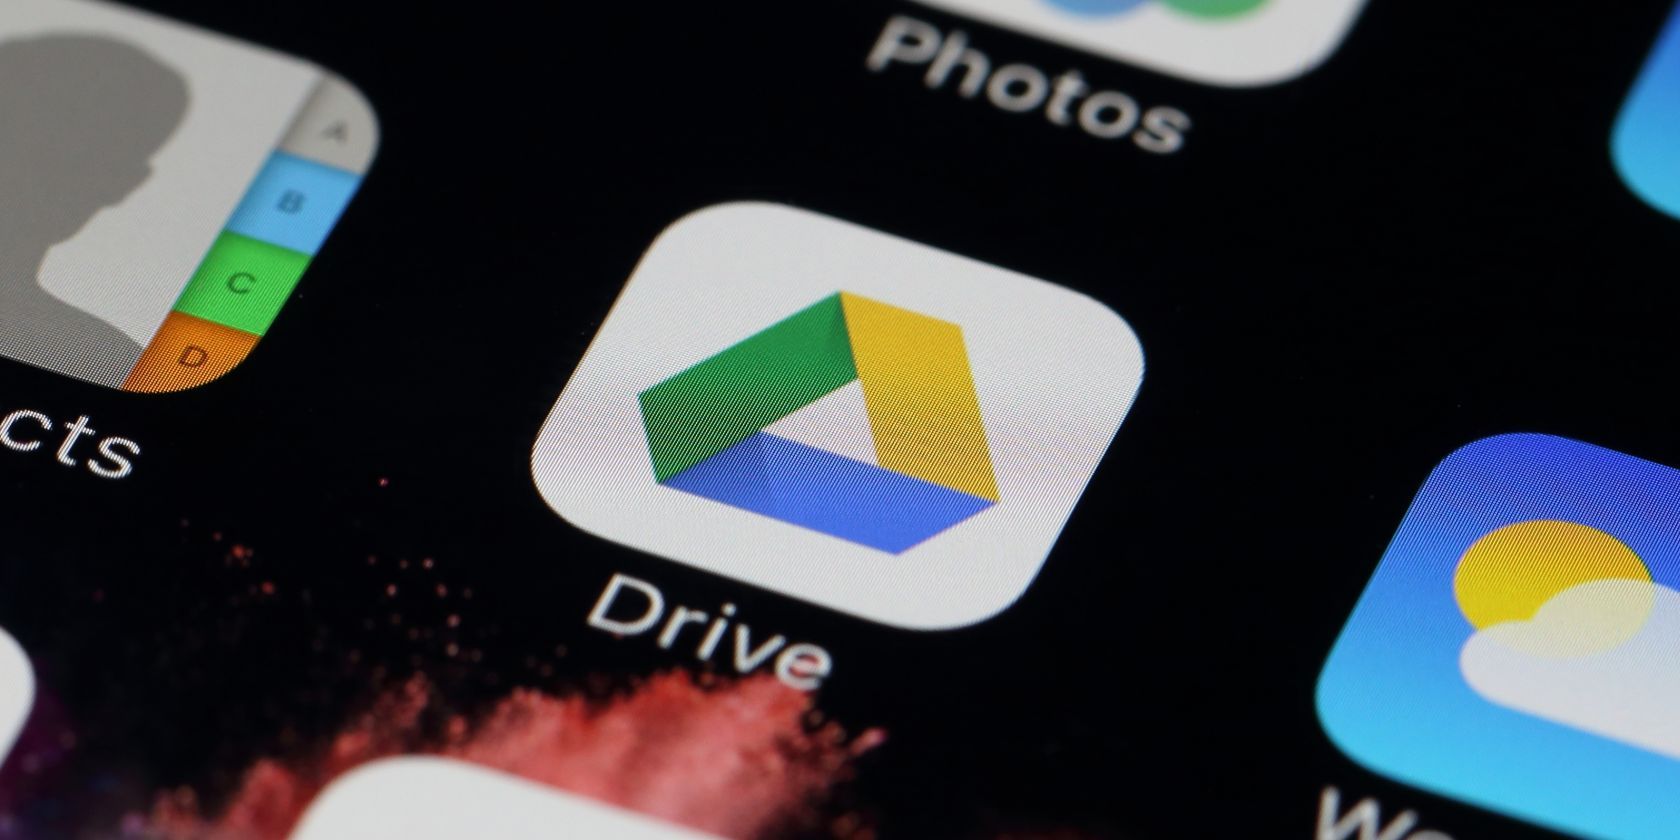 The Google Drive Desktop App is Being Shutdown in March, 2018